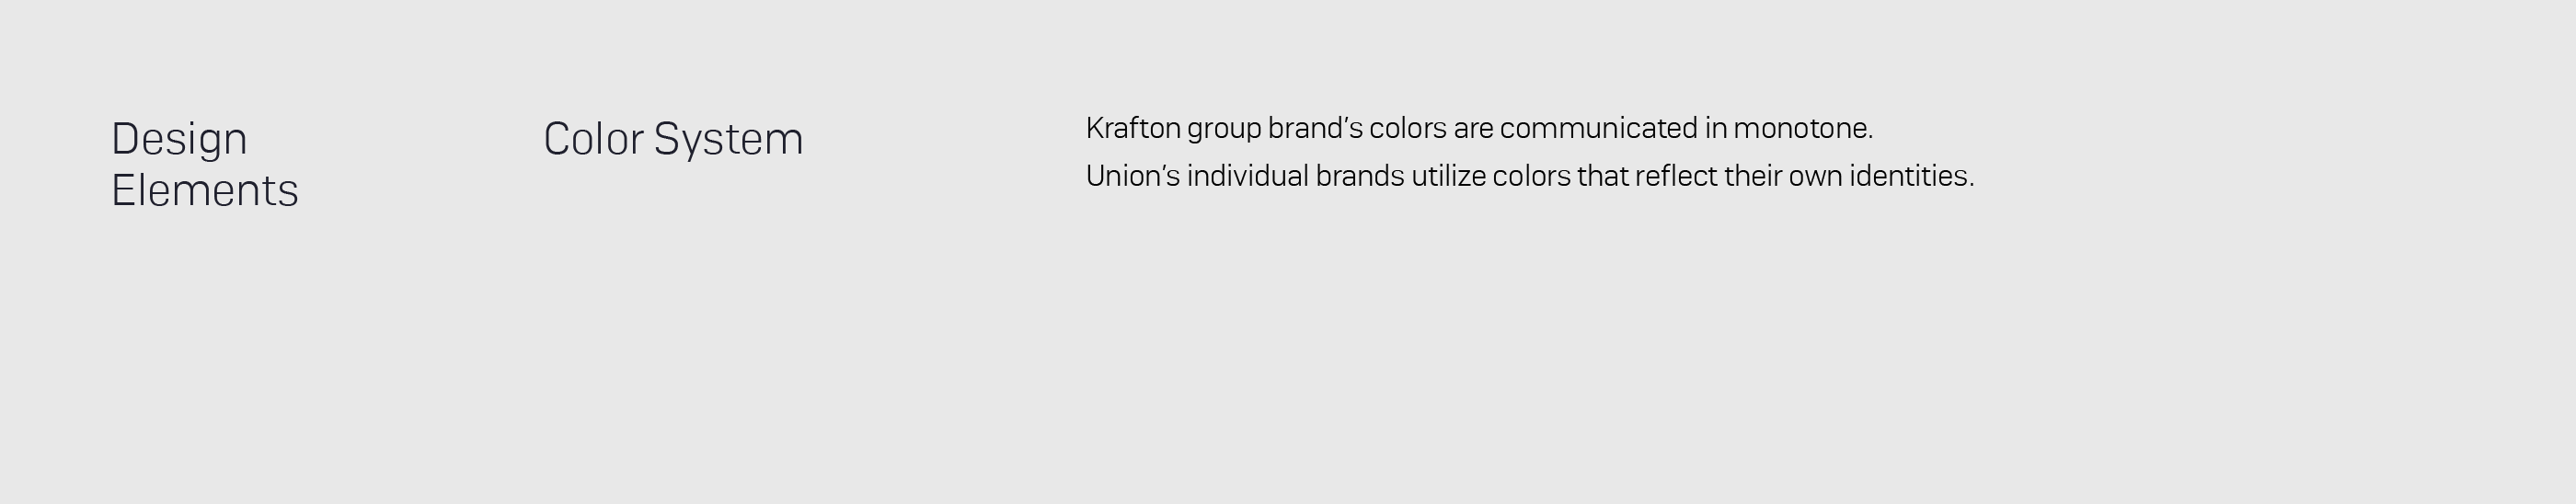 Krafton game union Brand eXperience Design renewal1cffc388492253.5df1e8c8aa86c.png